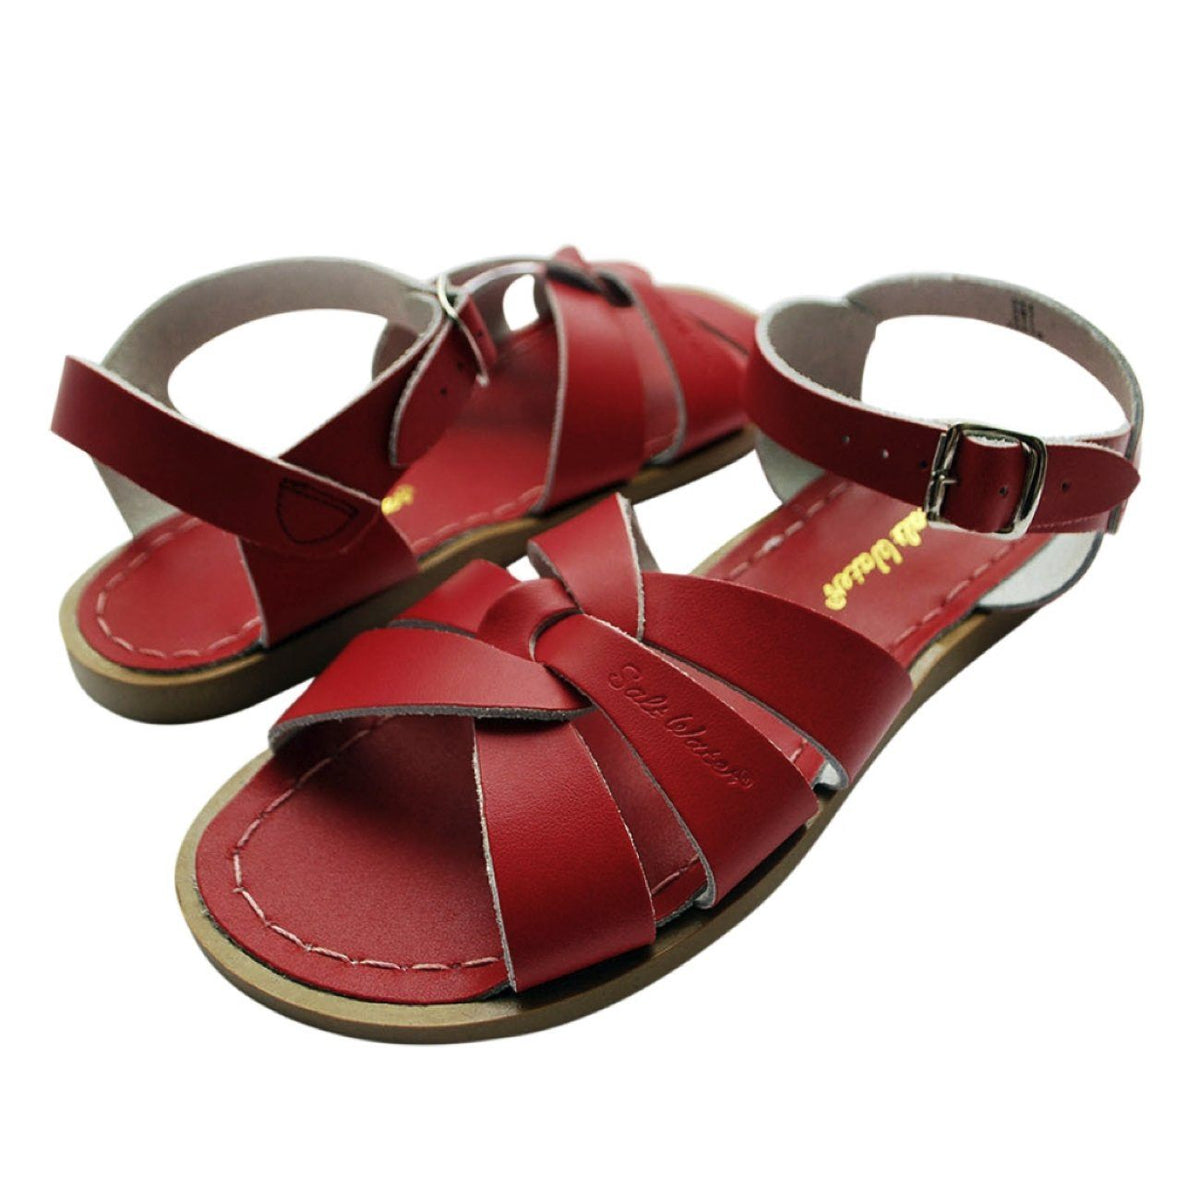 Salt Water Sandals, Original, Adults, Red Sandals Salt Water Sandals 